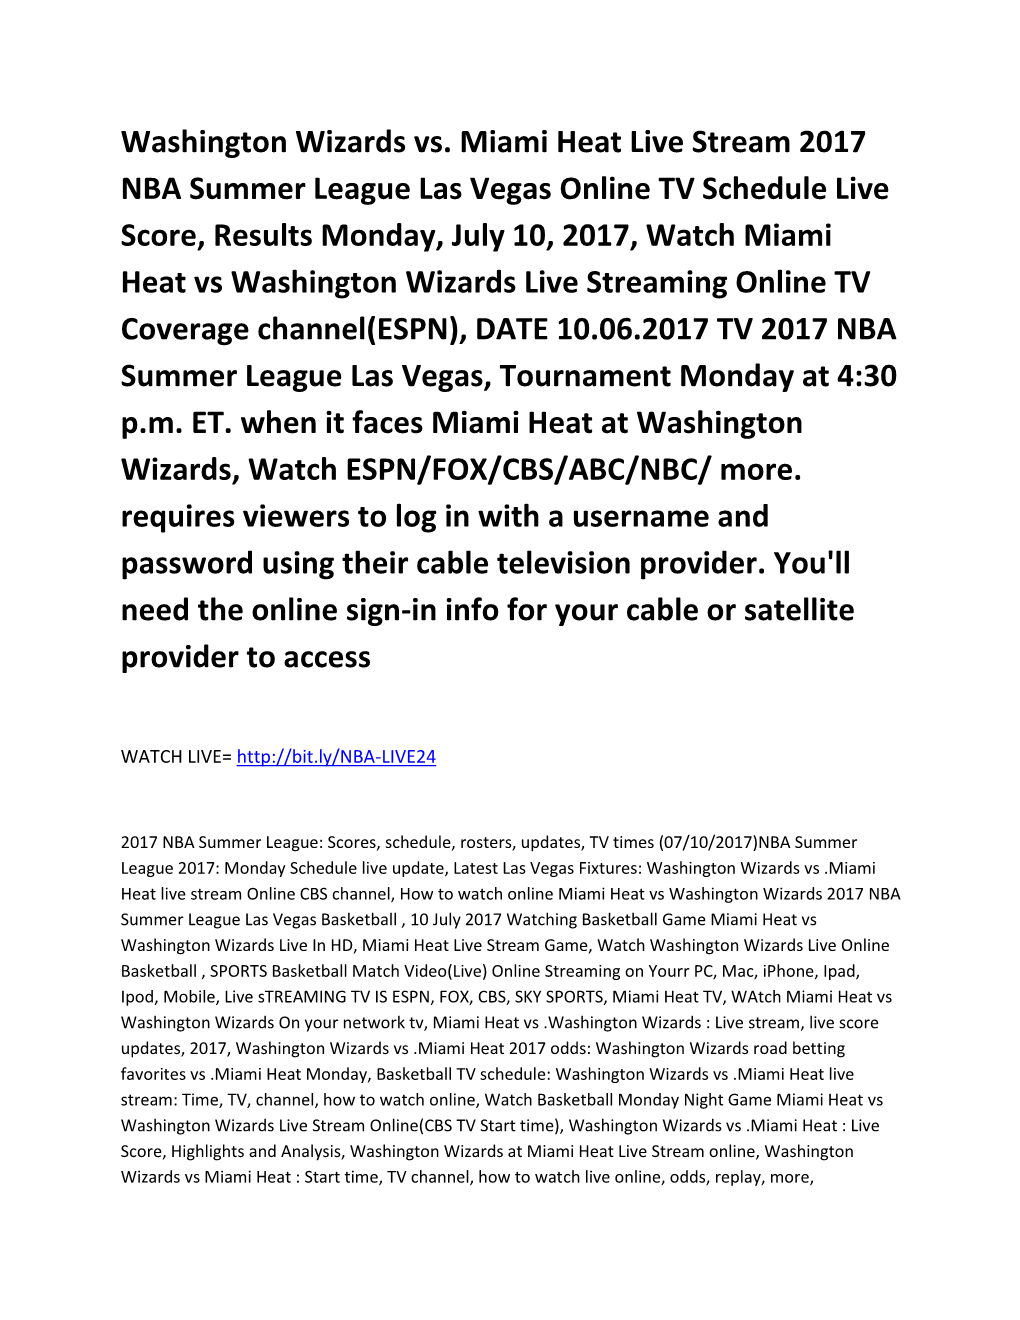 Washington Wizards Vs. Miami Heat Live Stream 2017 NBA Summer